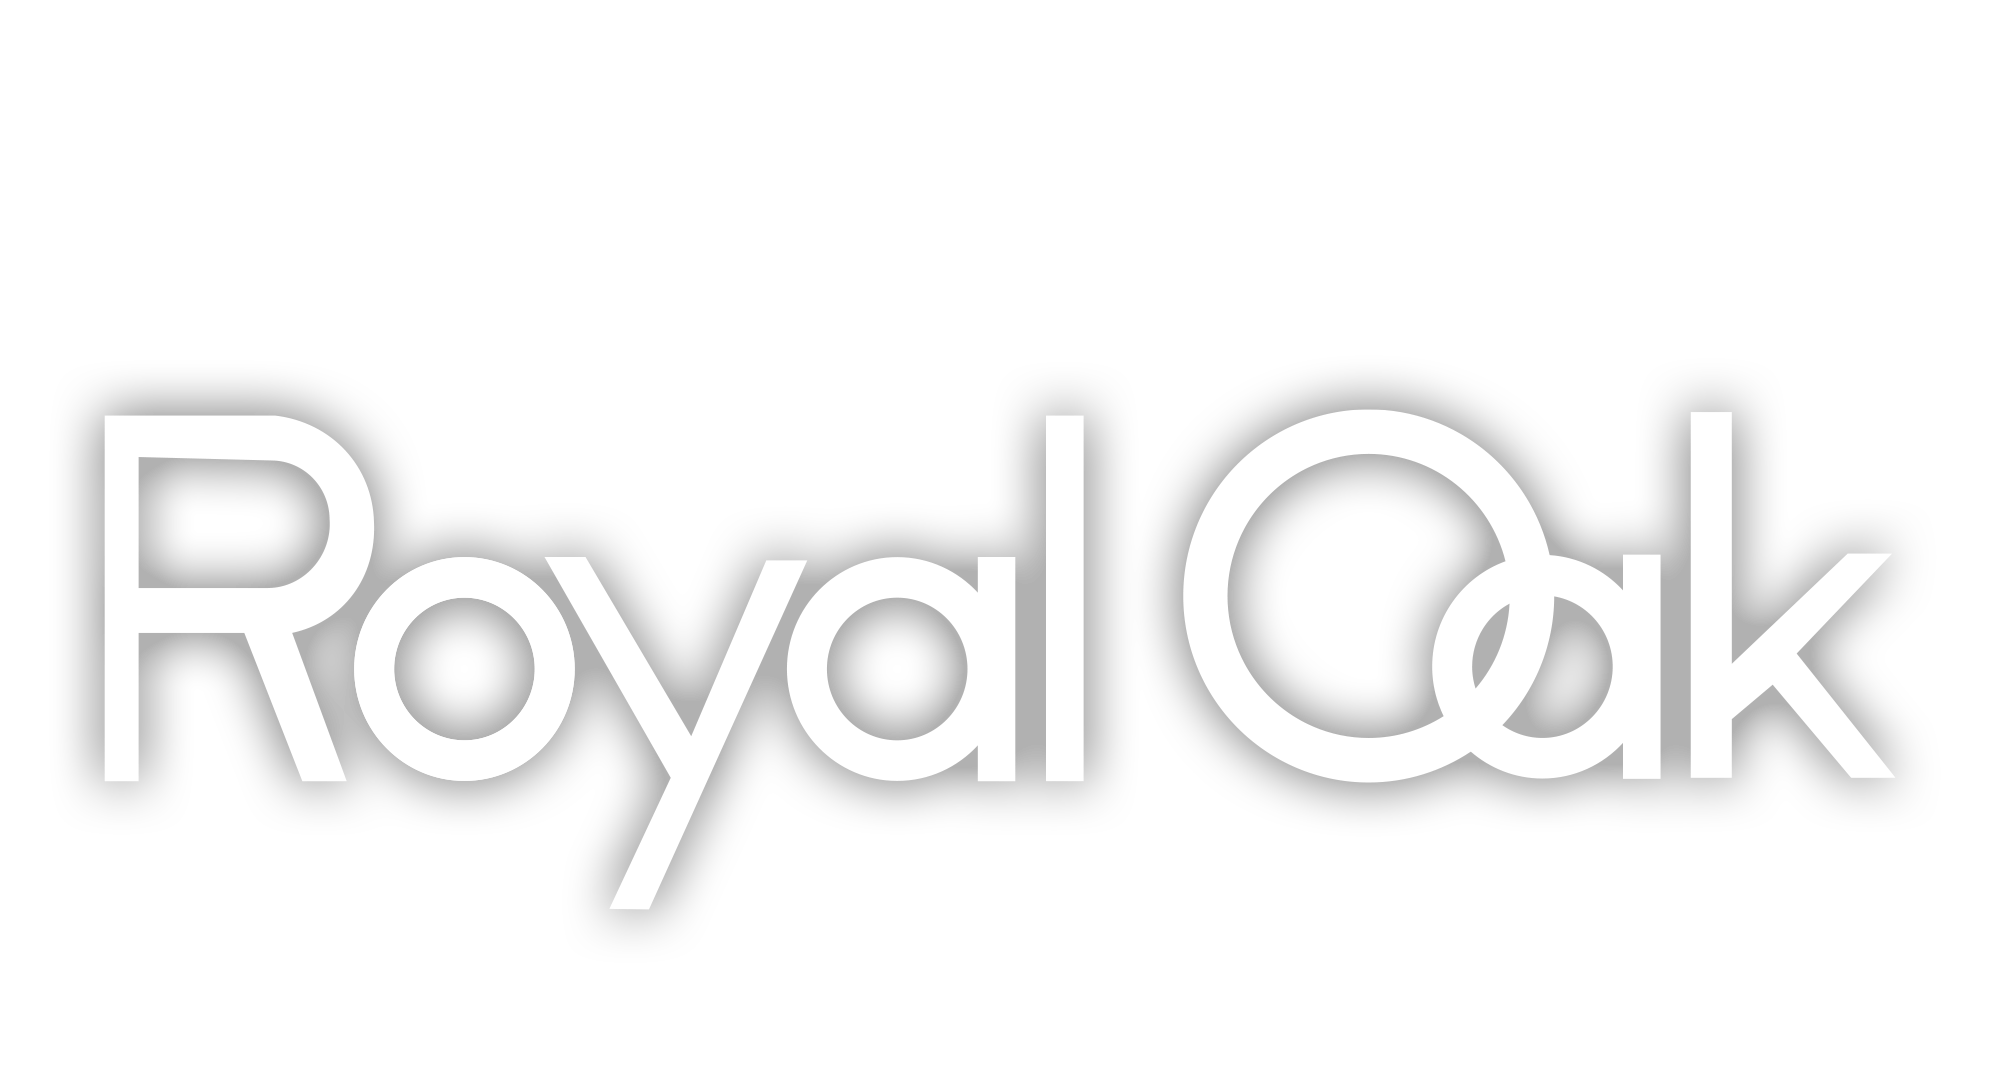 Colección Royal Oak